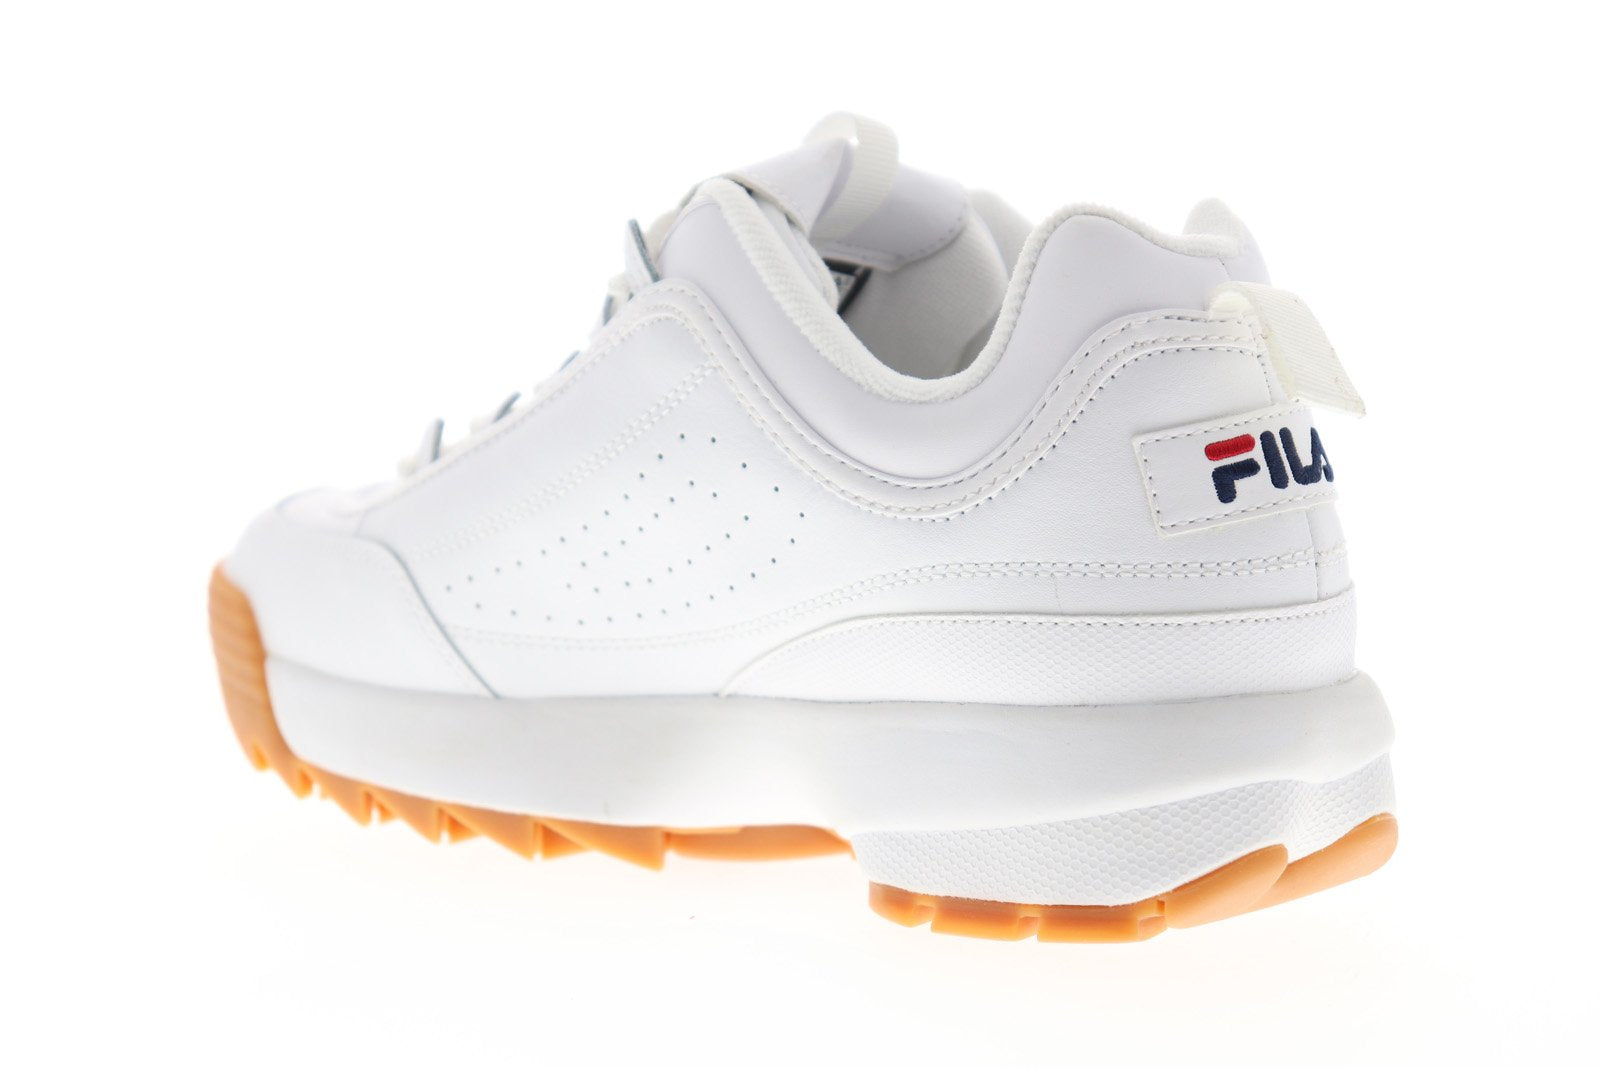 Fila Men's Disruptor Ii Premium White / Navy Gum Ankle-High Patent